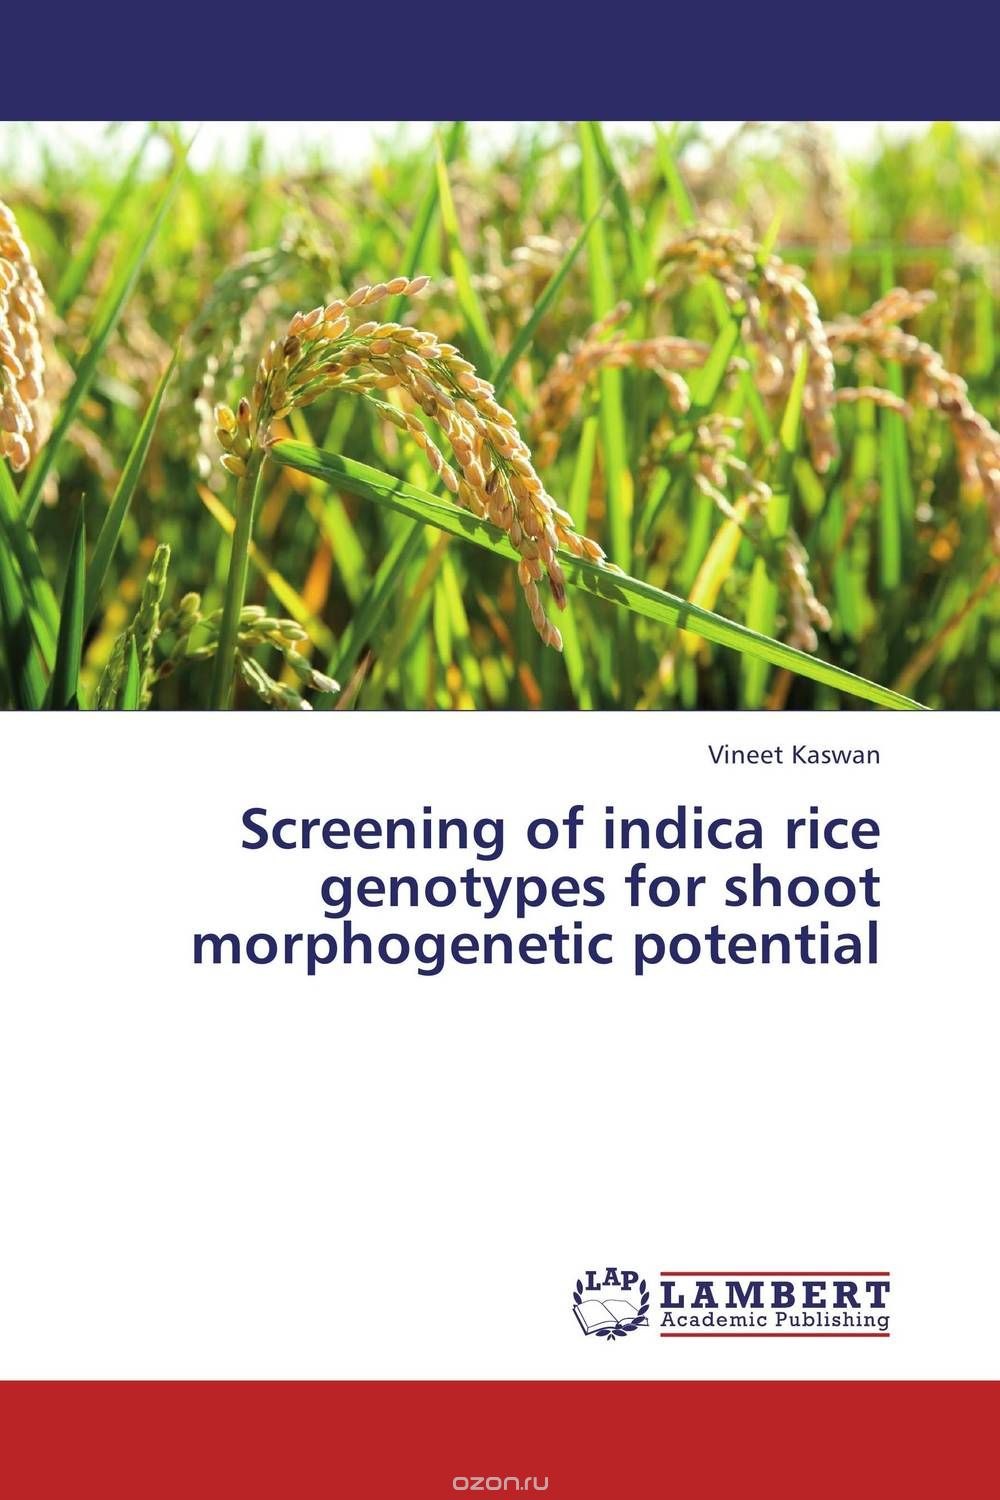 Скачать книгу "Screening of indica rice genotypes for shoot morphogenetic potential"